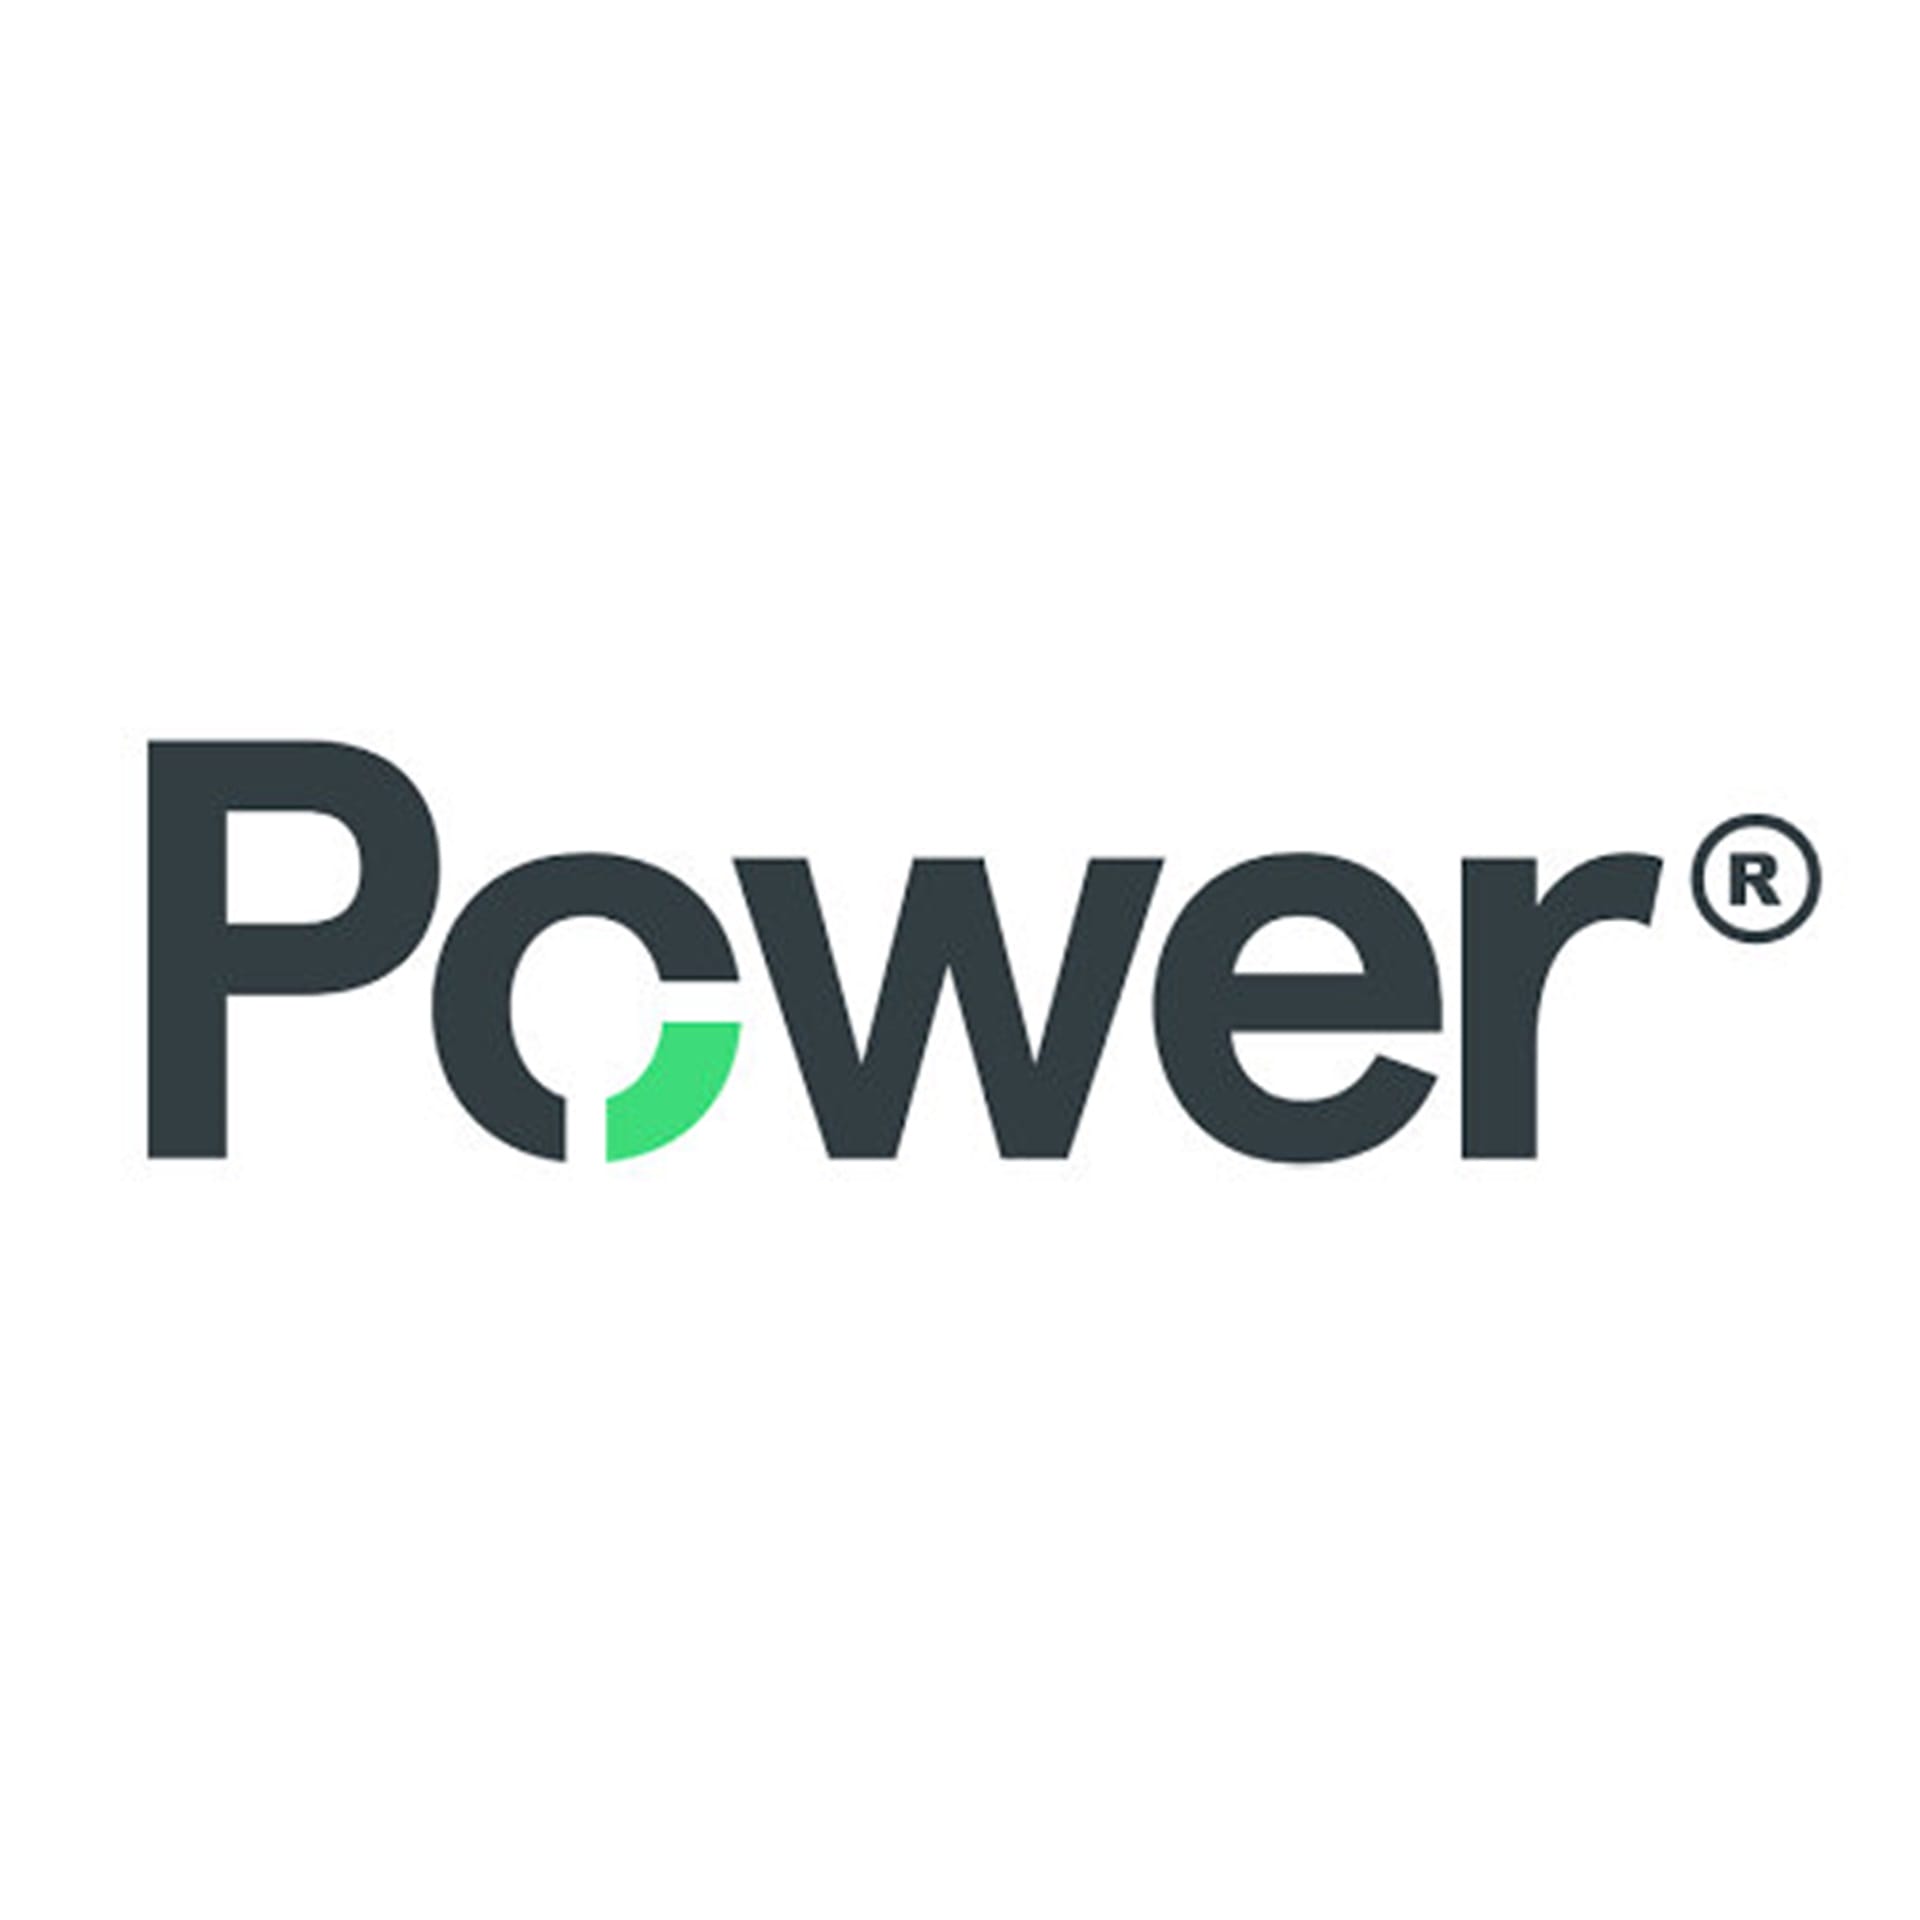 Power R logo a